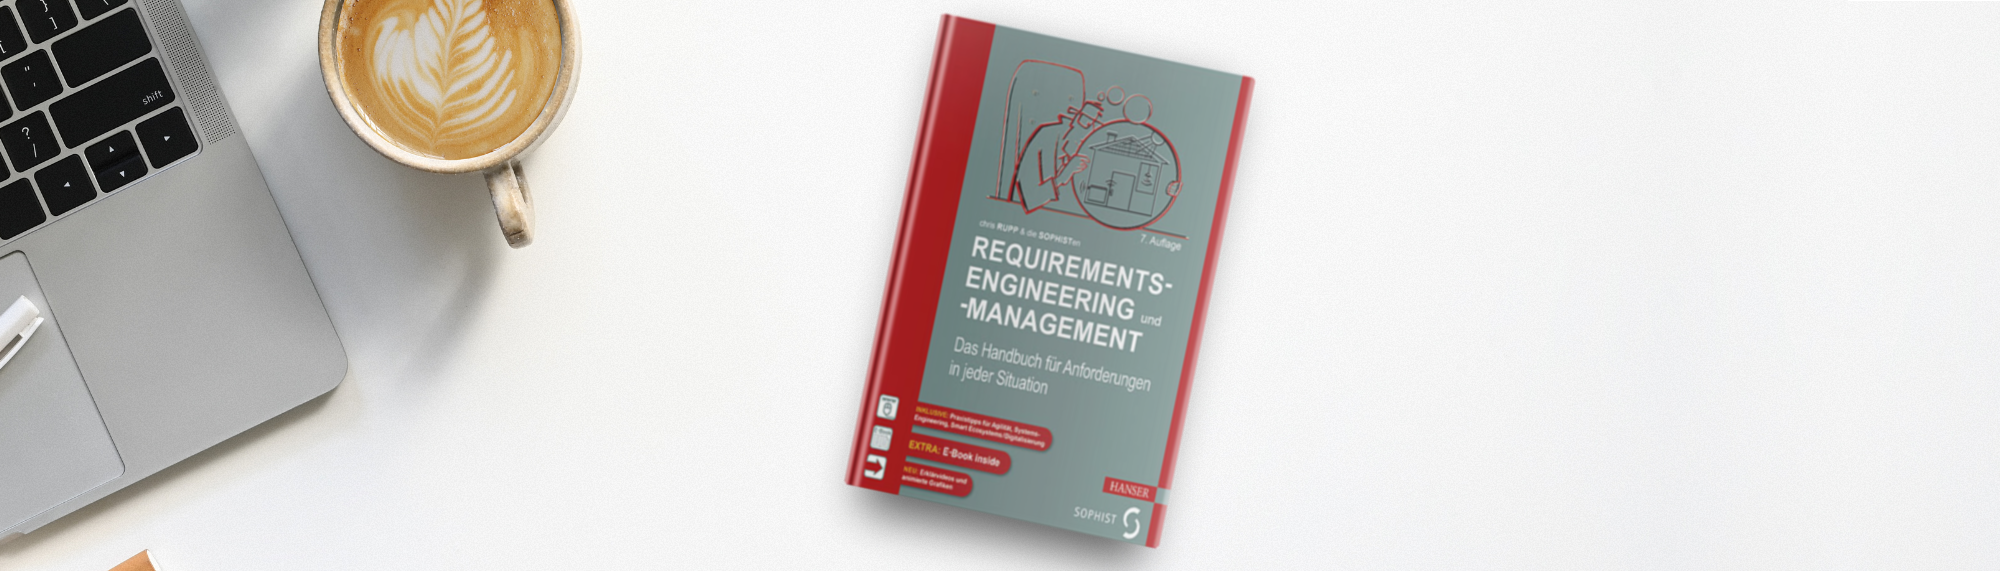 Chris Rupp book presentation: Requirements engineering | IAPM